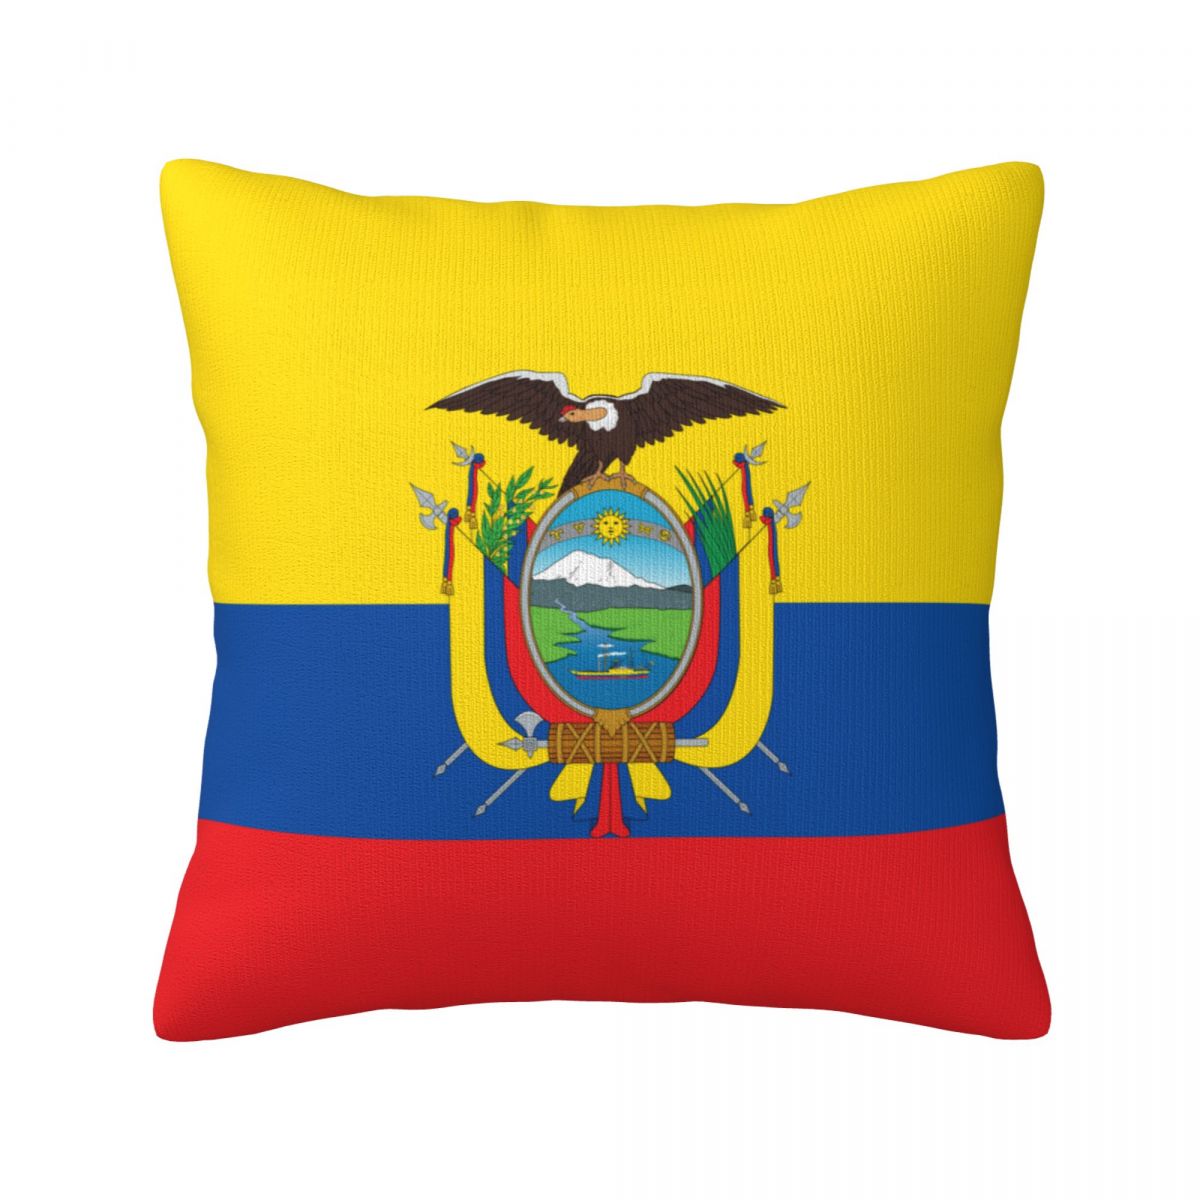 Ecuador Flag Pillow Covers 18x18 Inch